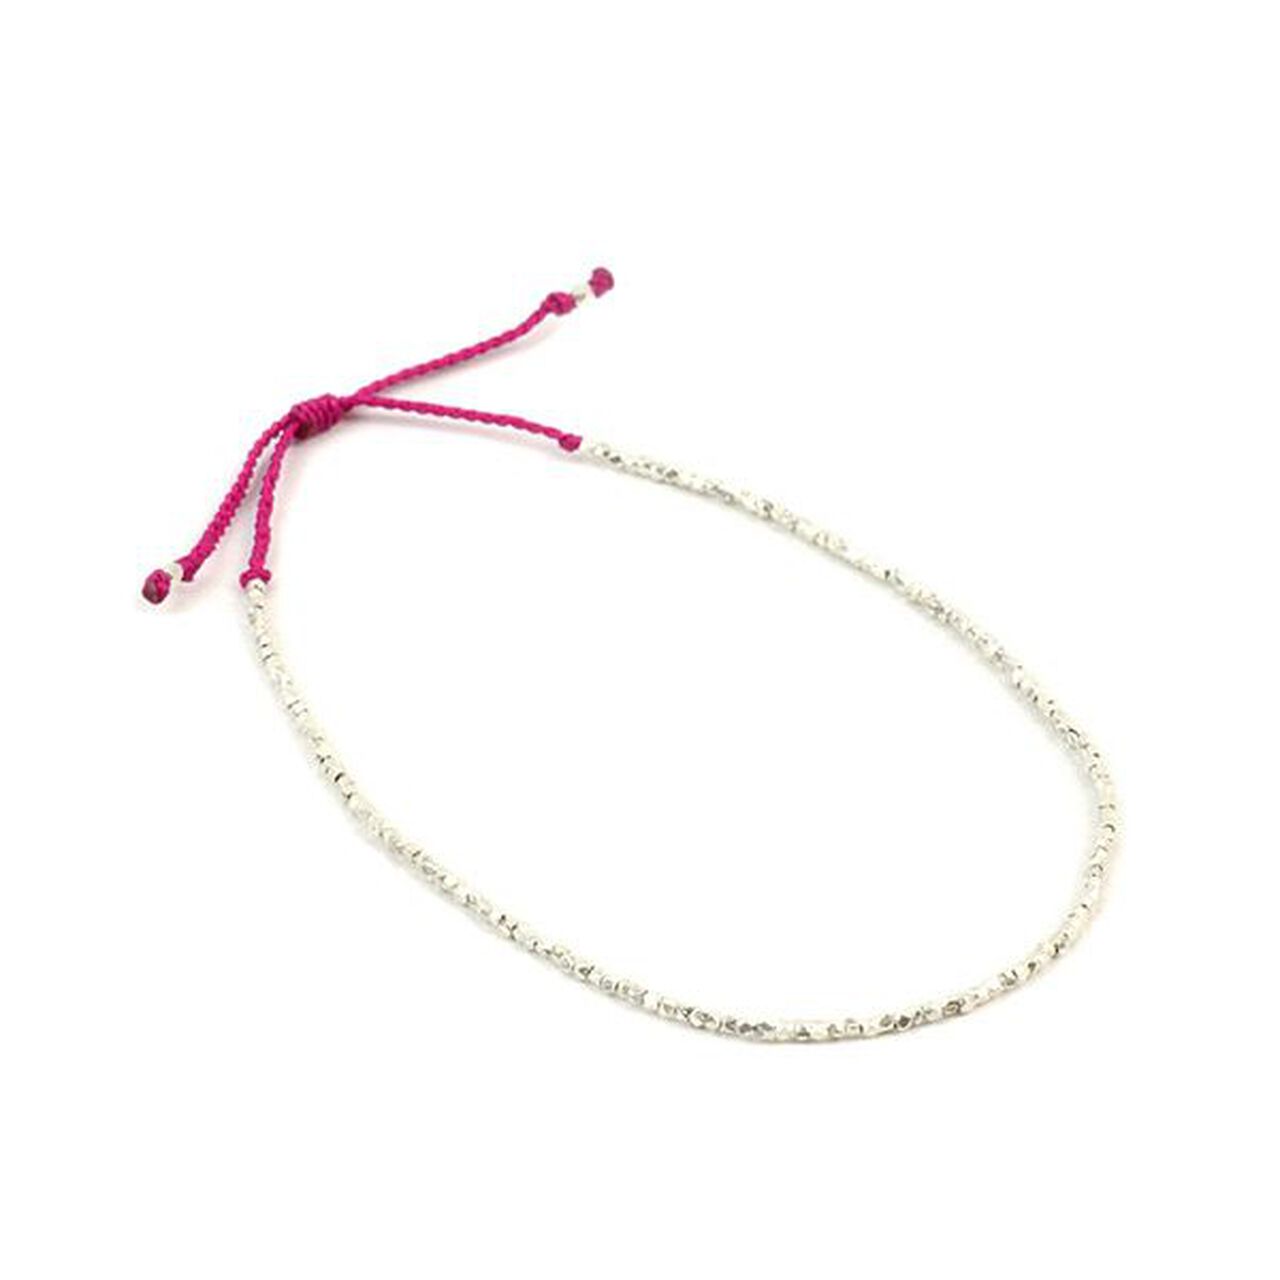 Karen Silver Beads Single Cord Anklet,Pink, large image number 0